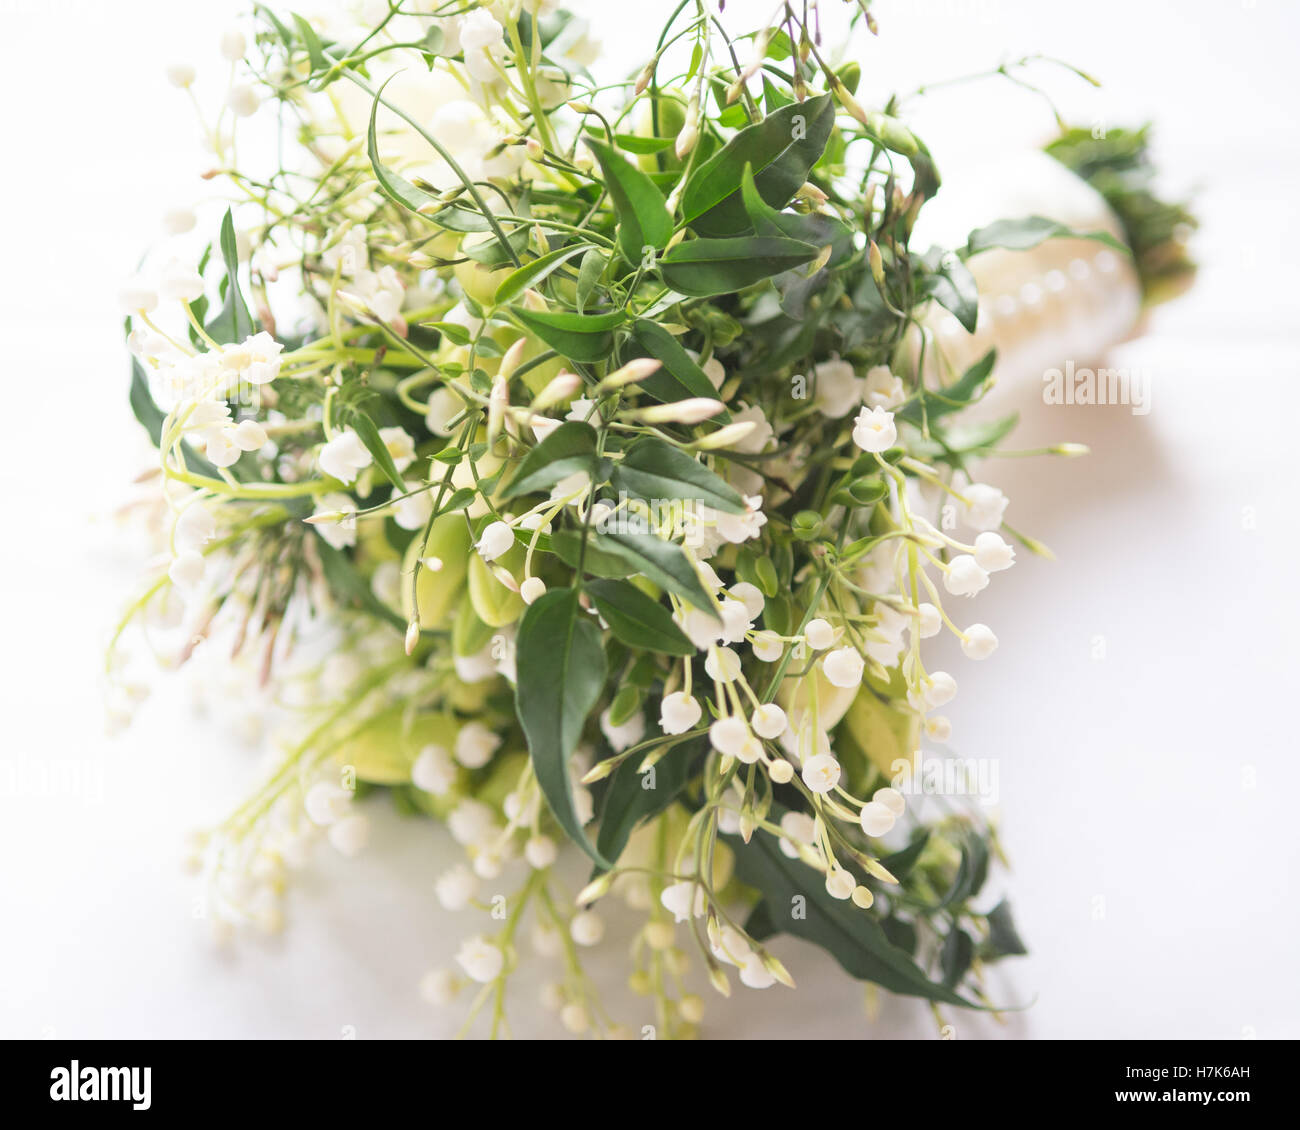 lily of the valley (Convallaria majalis) wedding posy bouquet Stock Photo